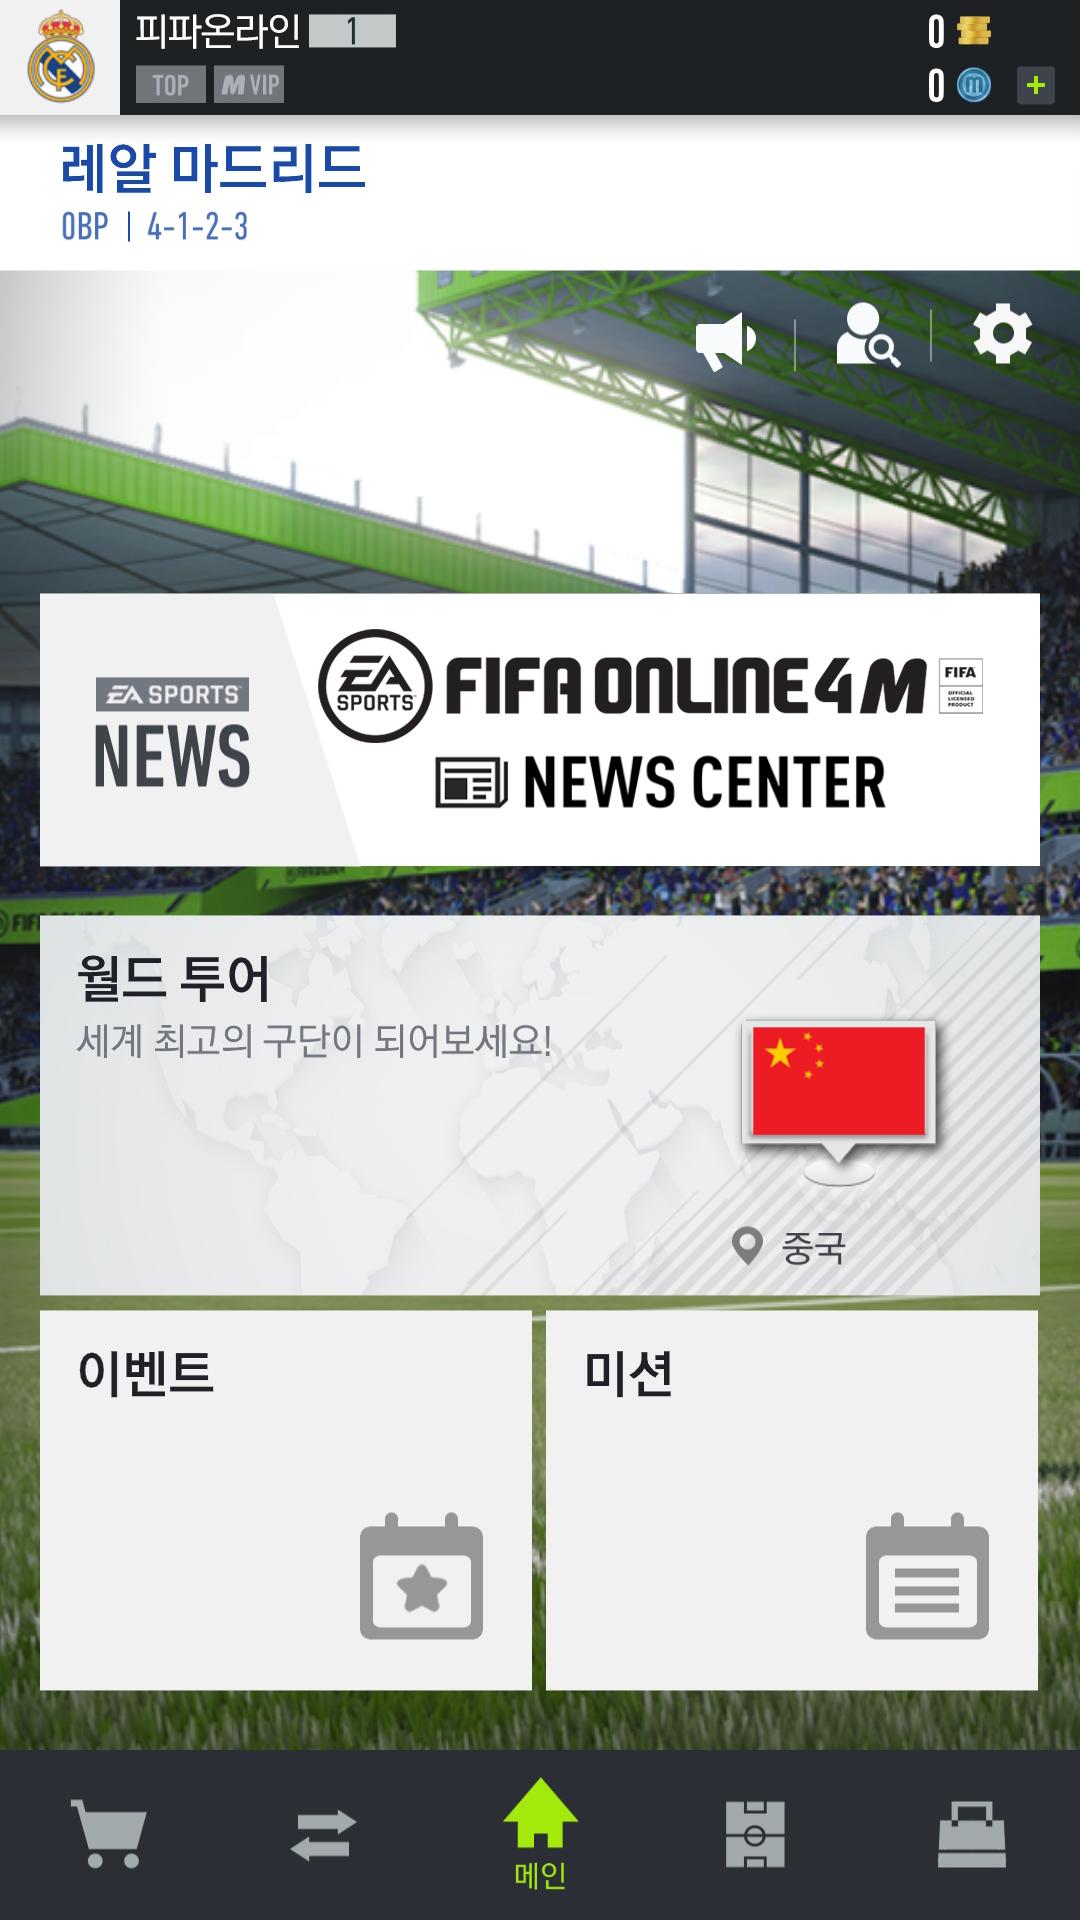 FIFA ONLINE 4 M by EA SPORTS™ 1.0.82 Screenshot 6